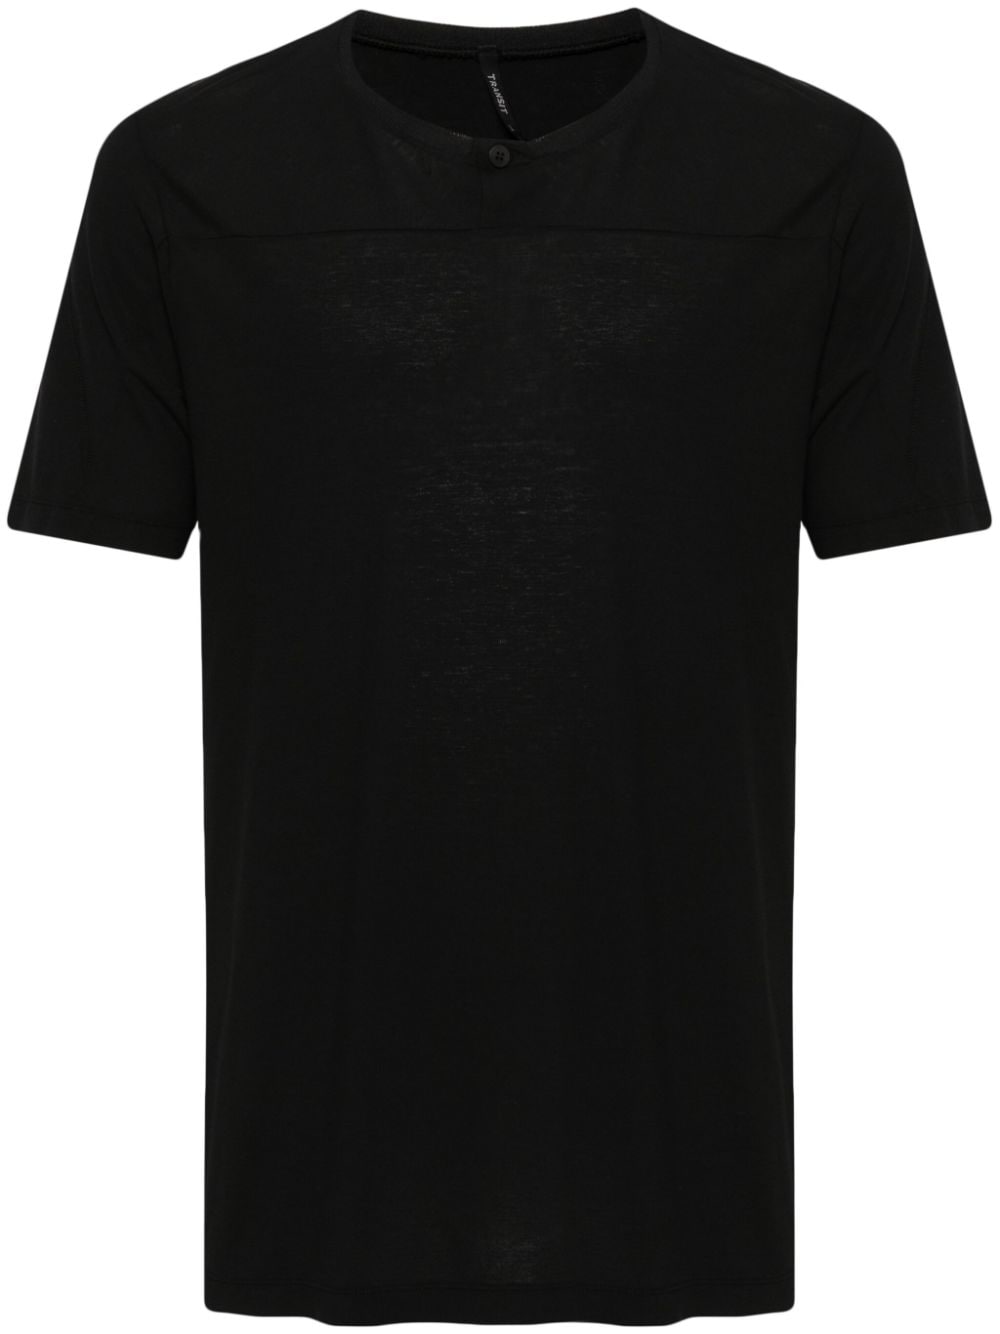 Transit stitched detailed t-shirt - Black